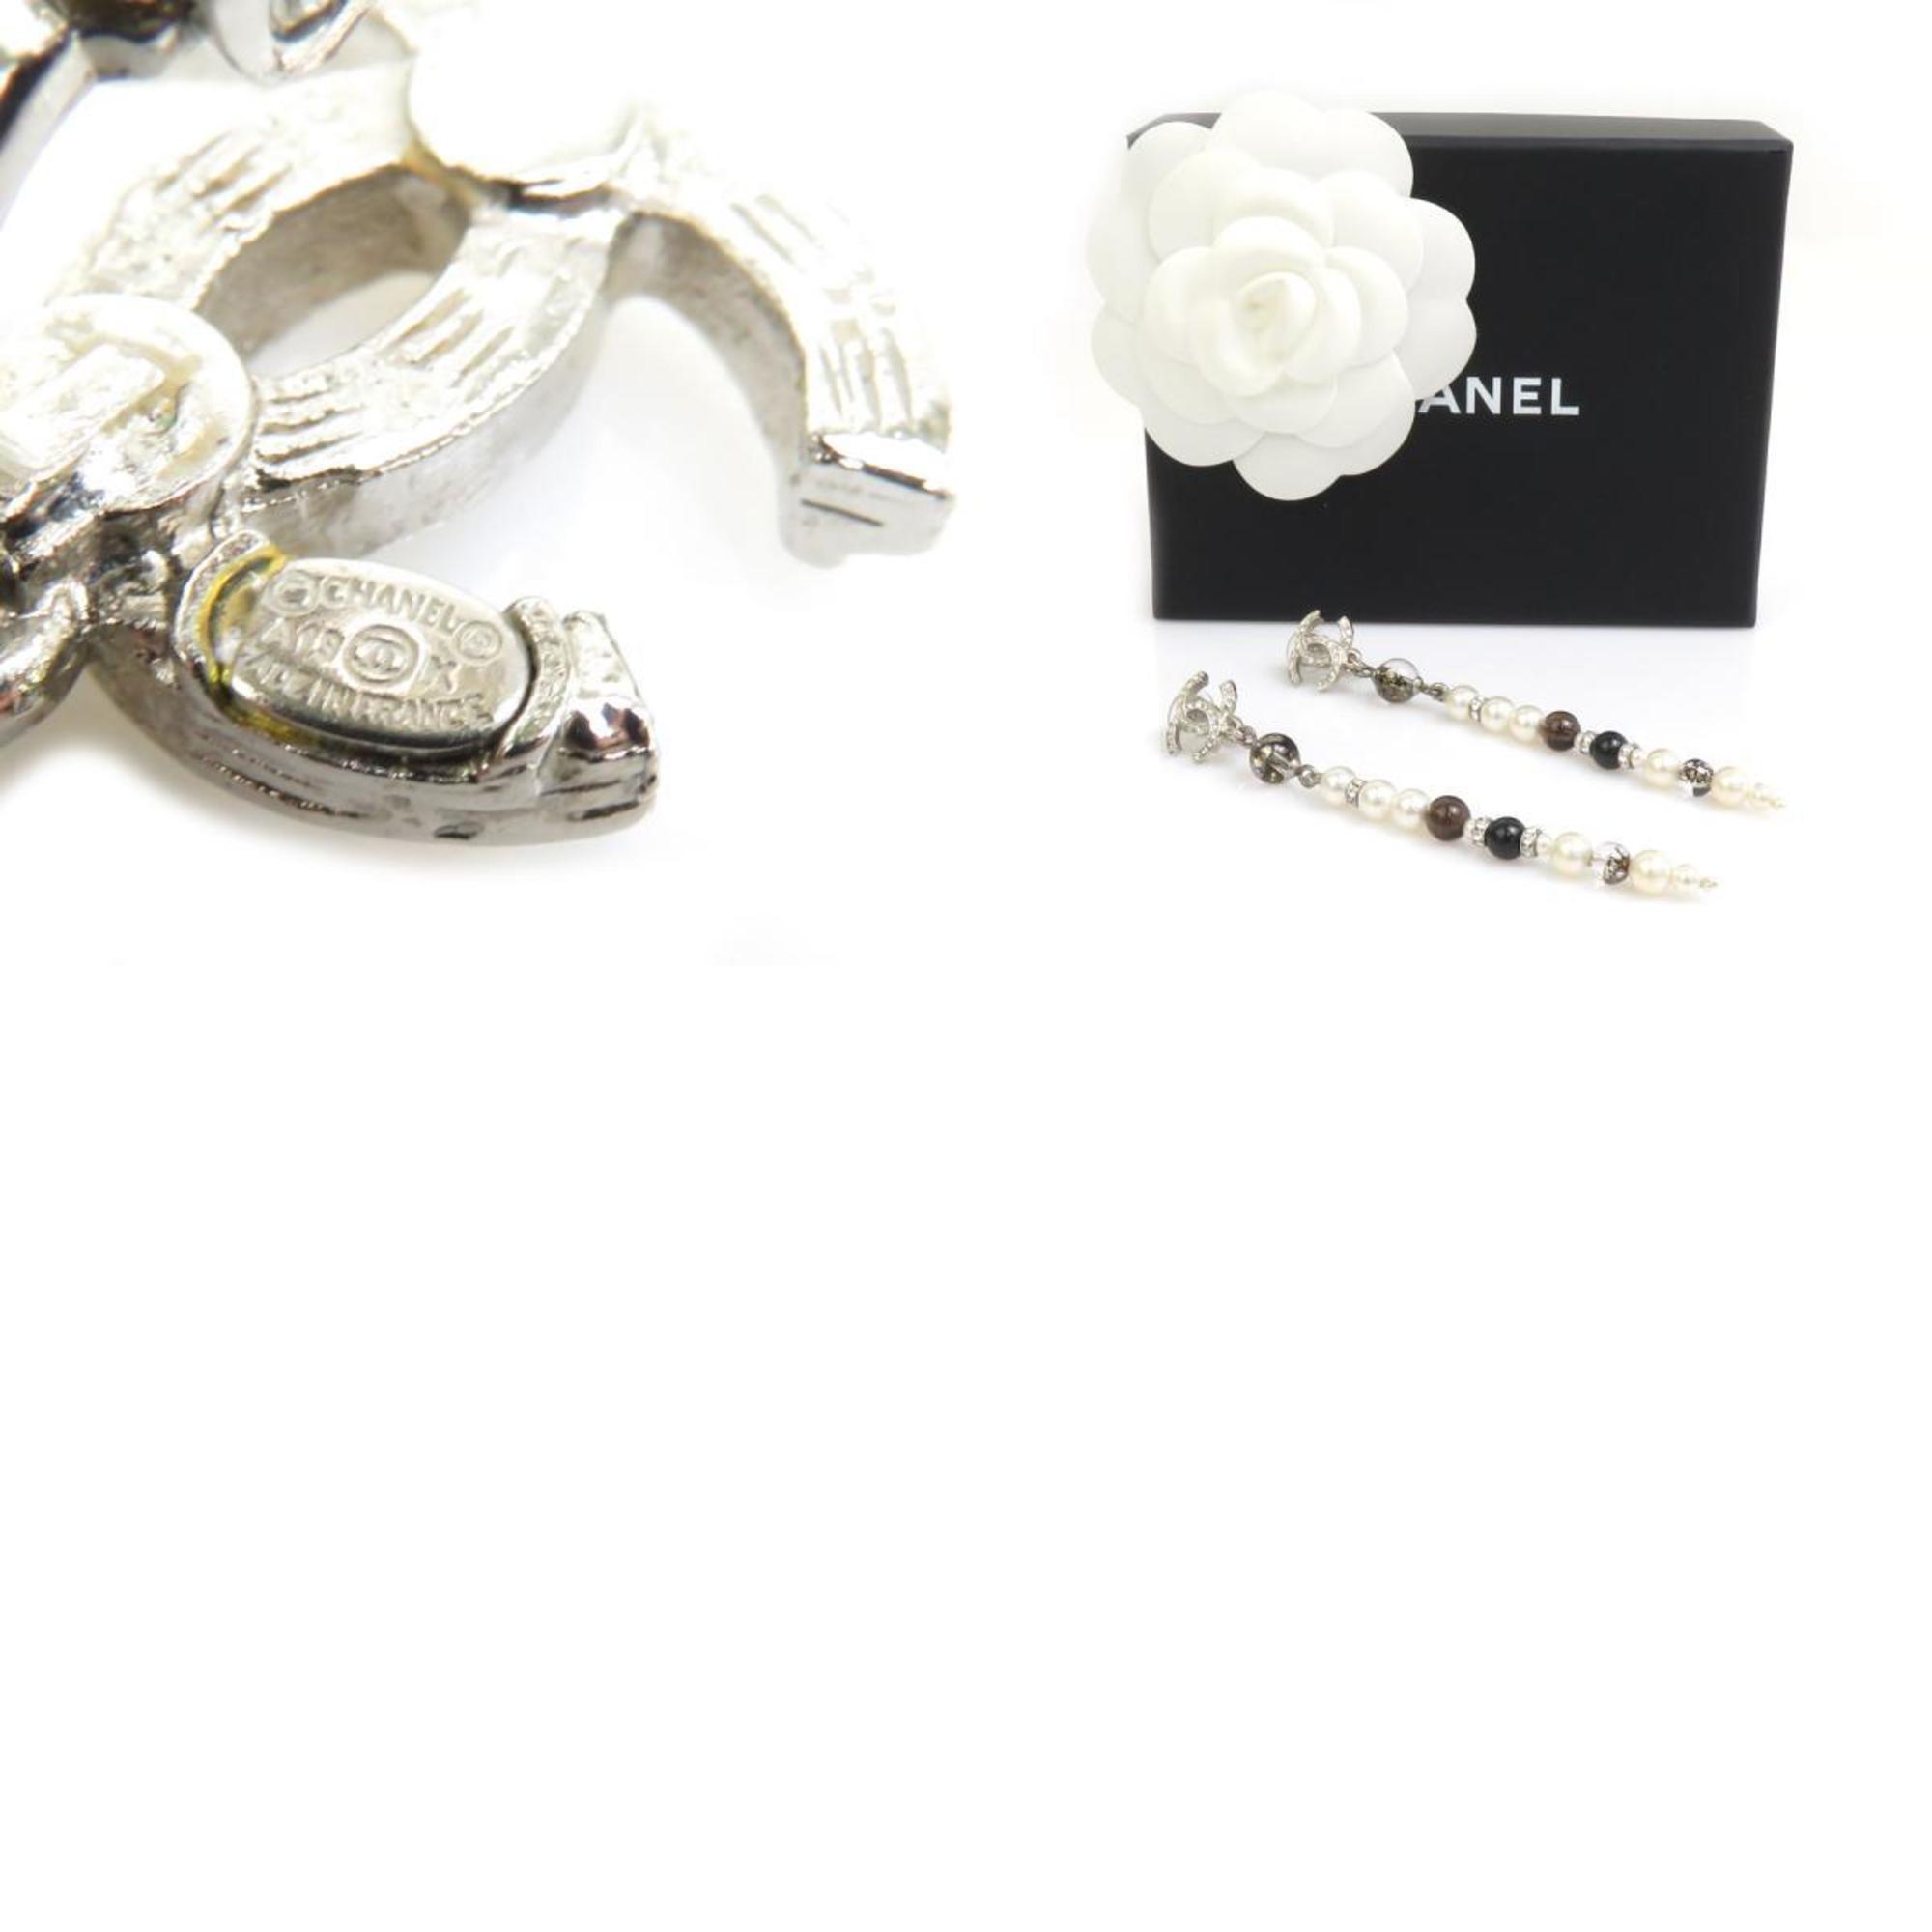 CHANEL Earrings Coco Mark Metal/Faux Pearl/Rhinestone Silver/White/Black Women's e58489a